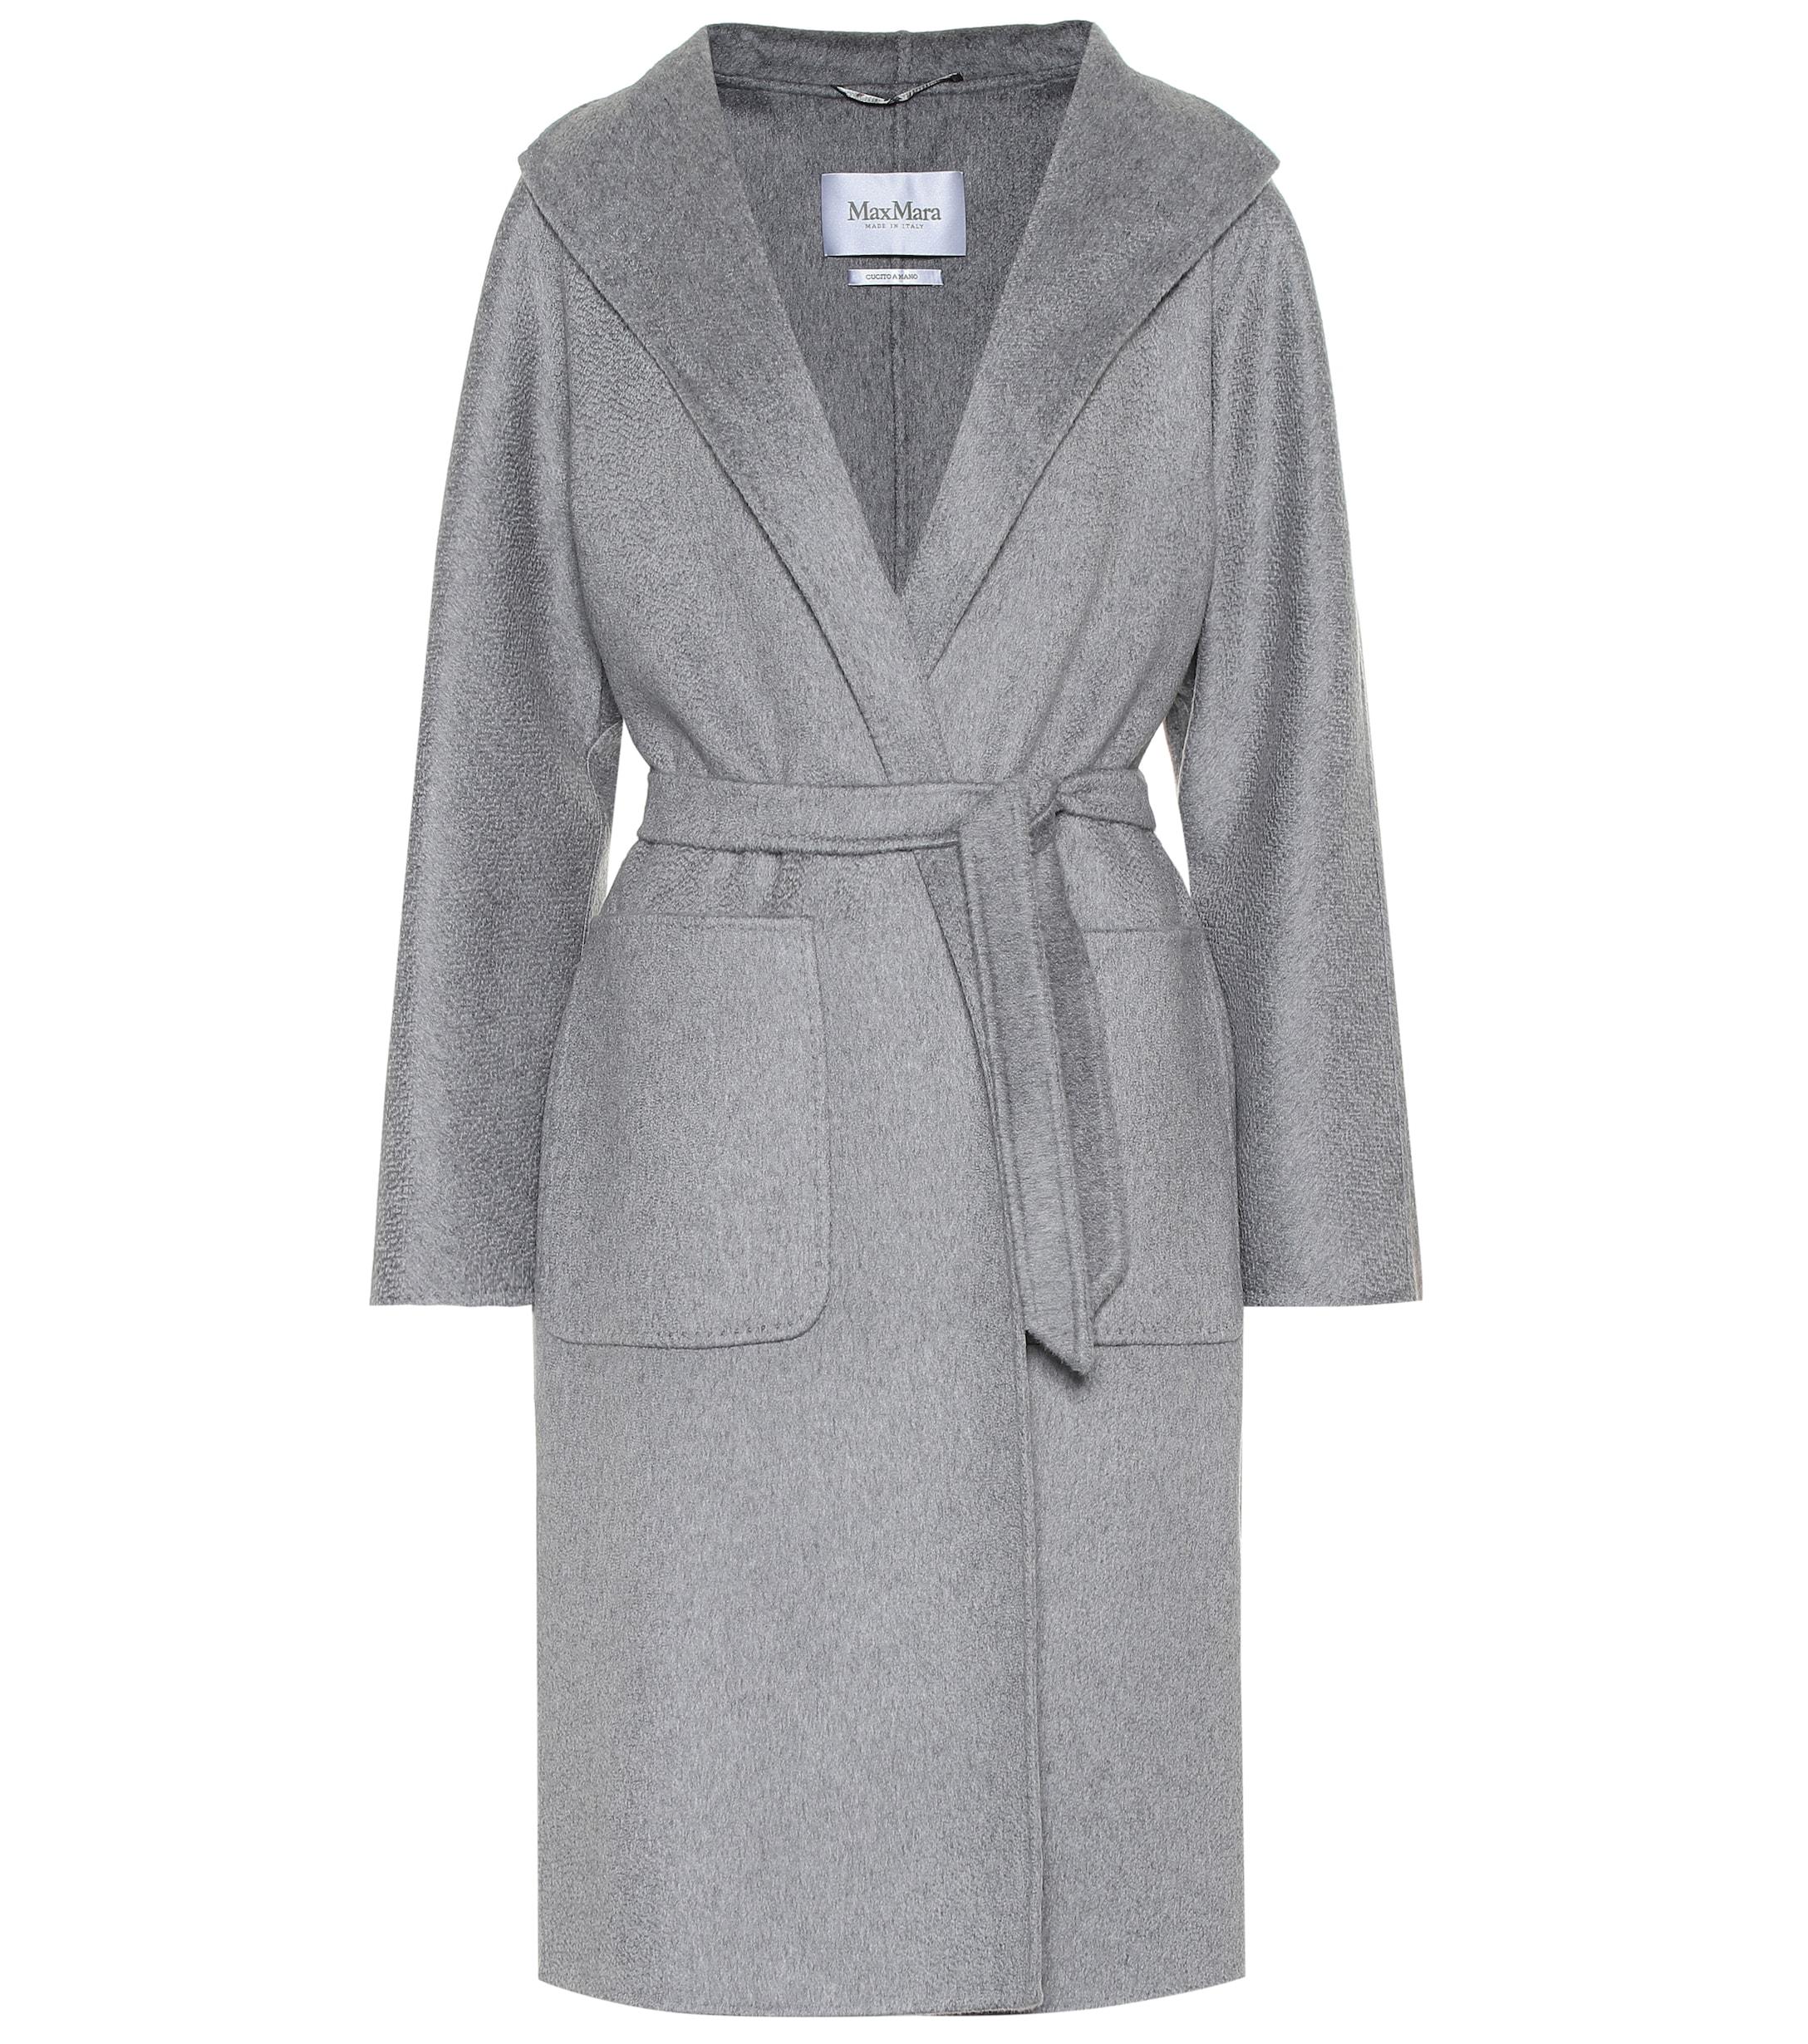 Max Mara Lilia Double-face Cashmere Coat in Grey (Gray) - Lyst